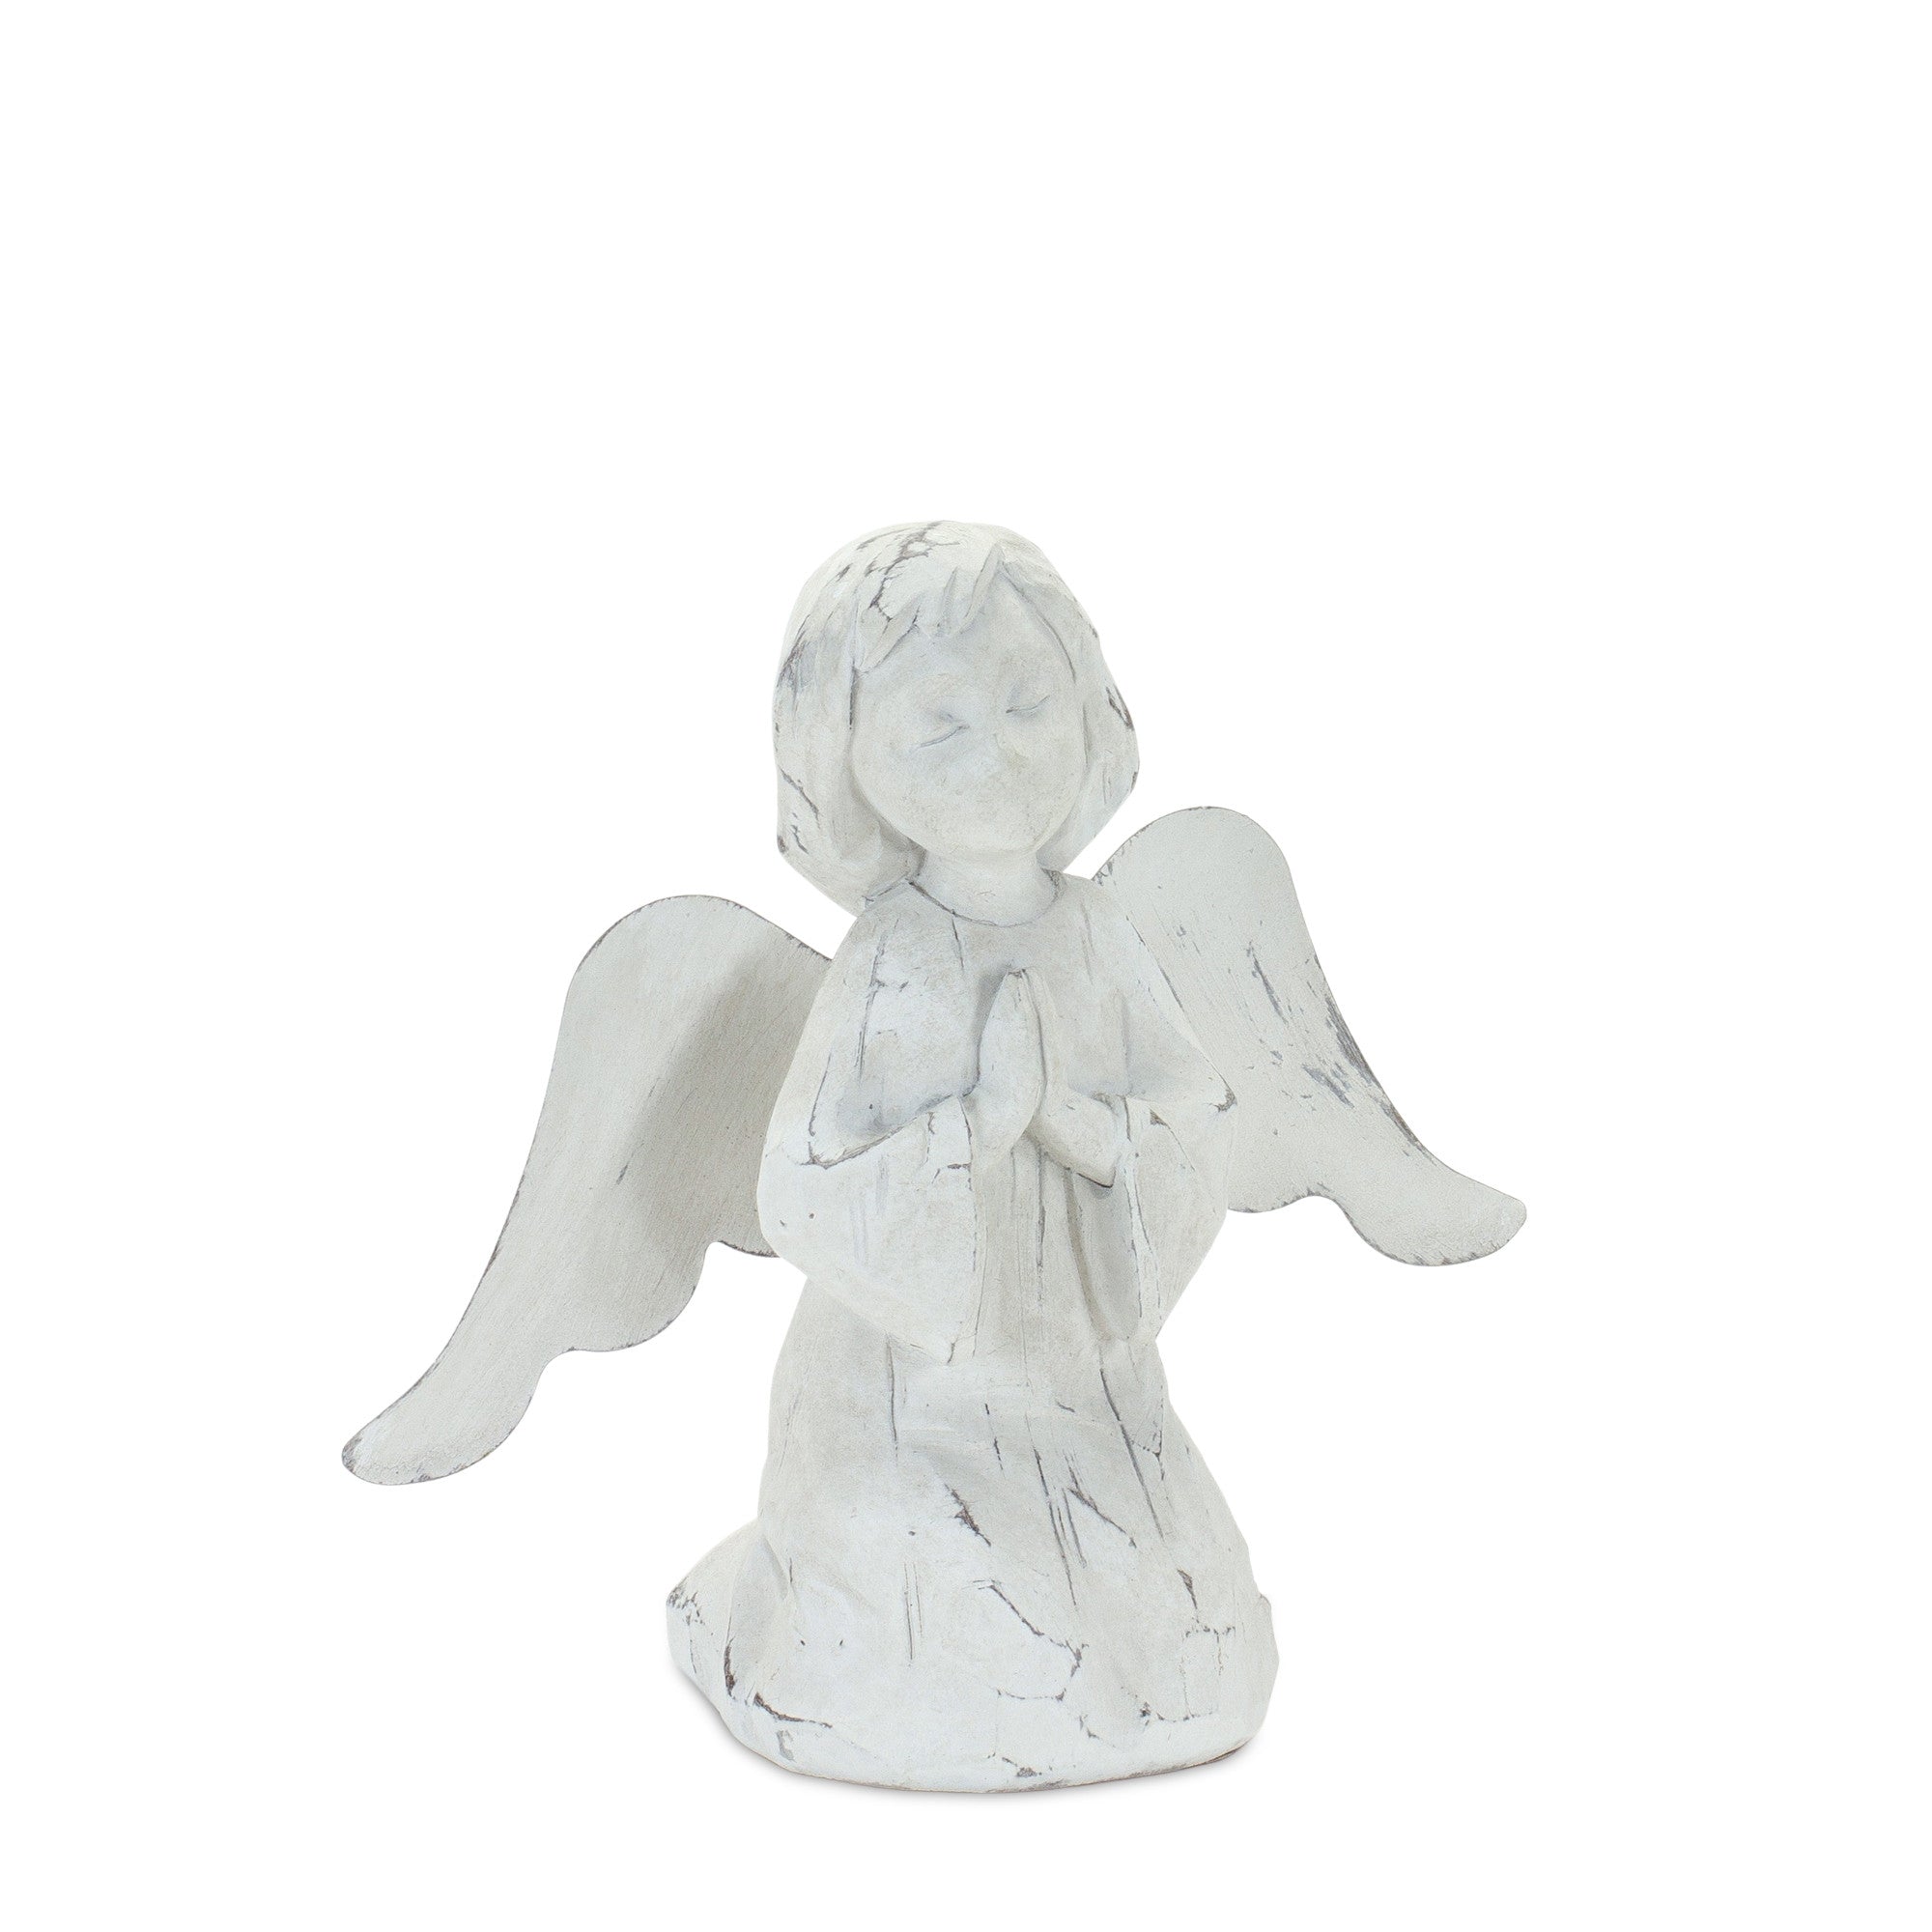 Set Of Three 8" White Washed Polyresin Angel Figurine